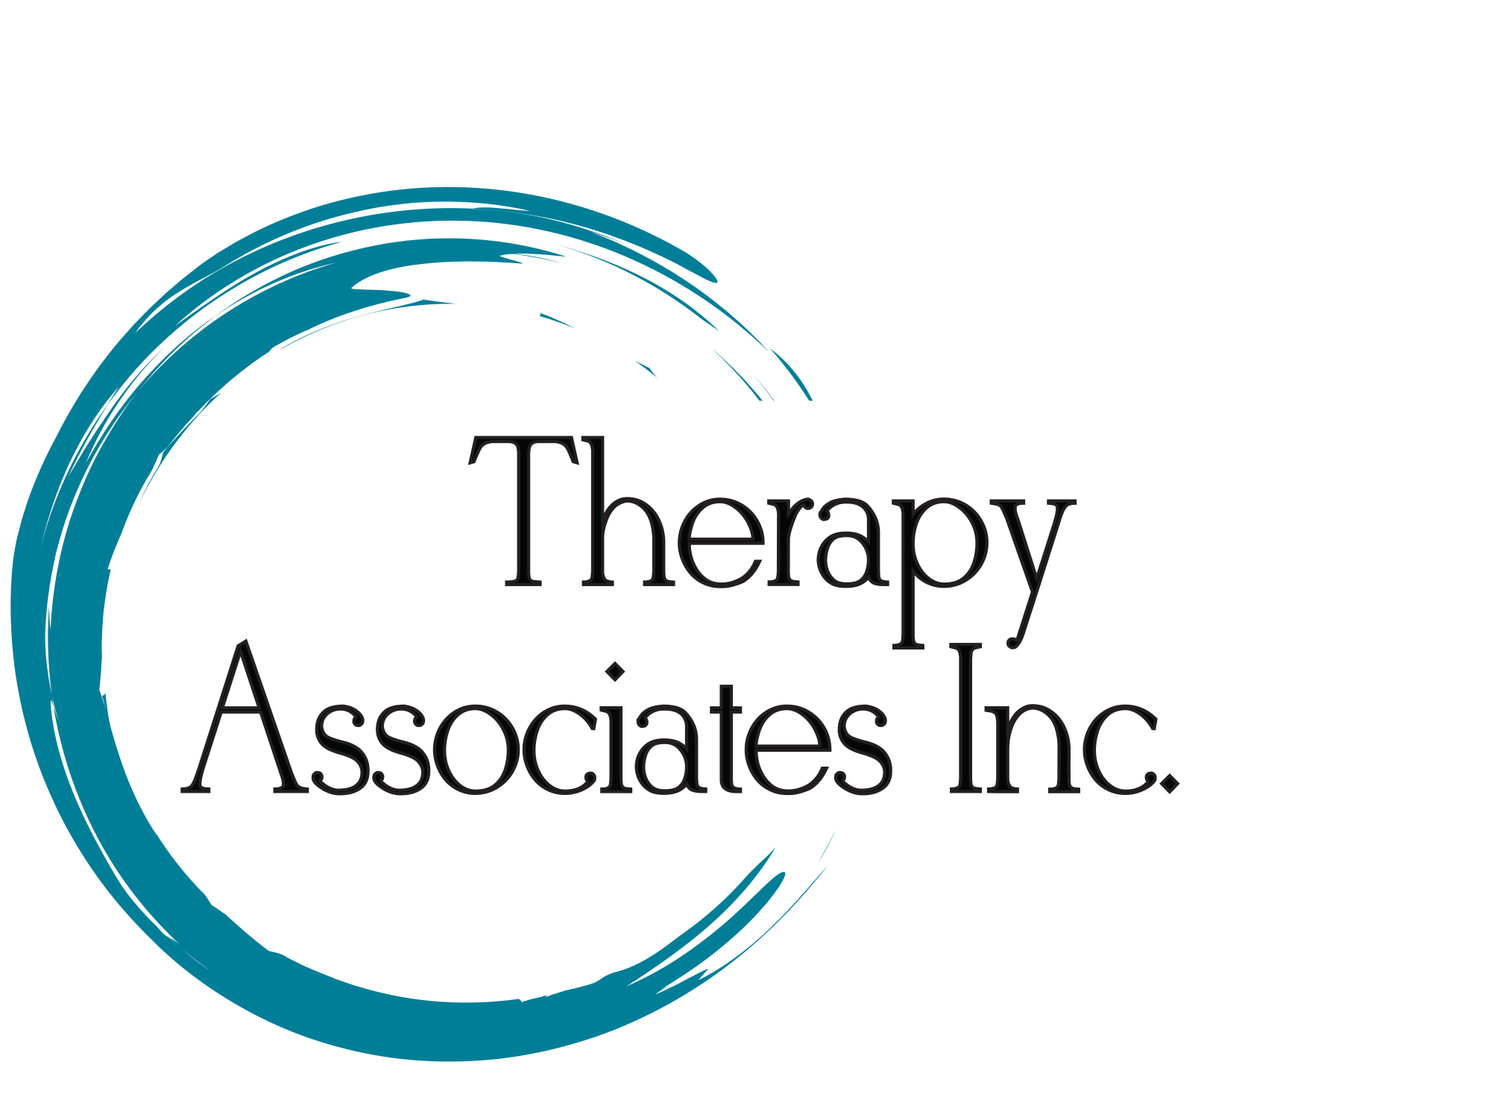 Therapy Associates Inc.